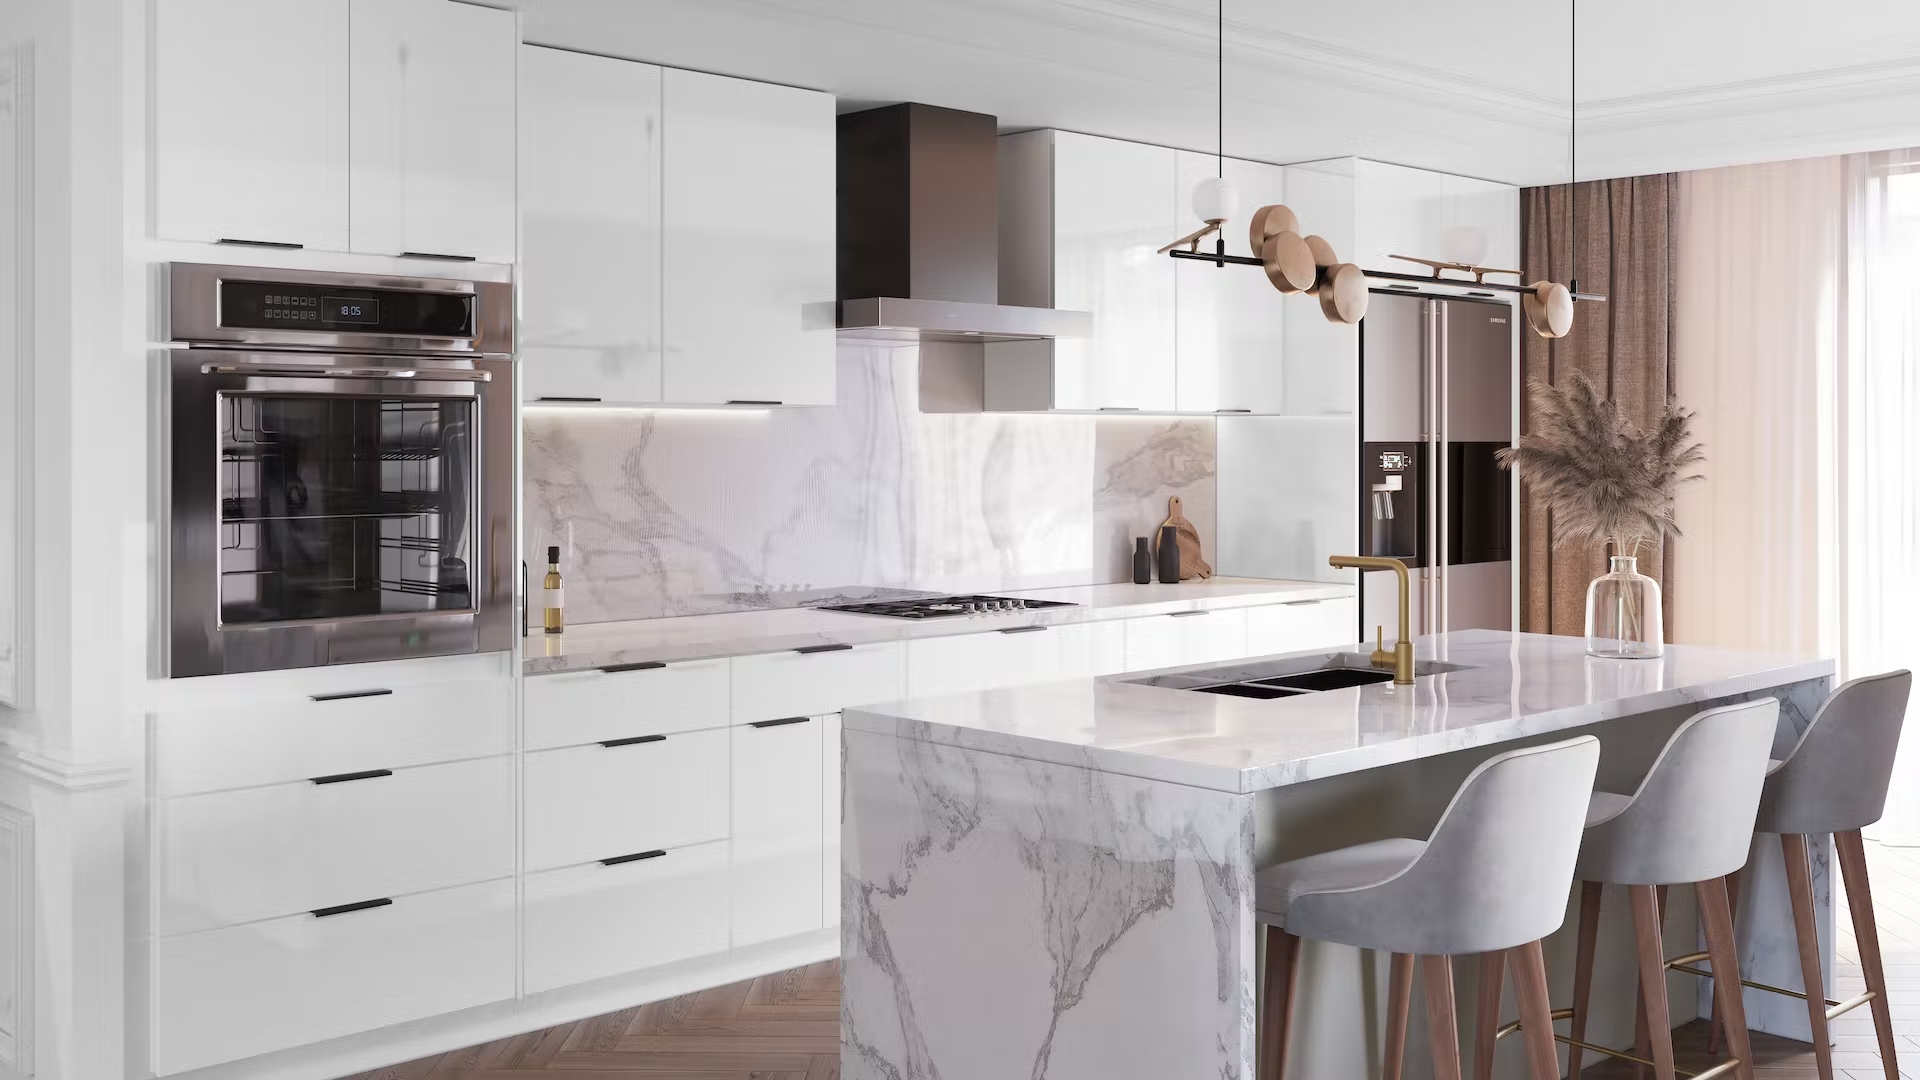 Fabuwood White Contemporary kitchen cabinets with quartz countertop and backsplash